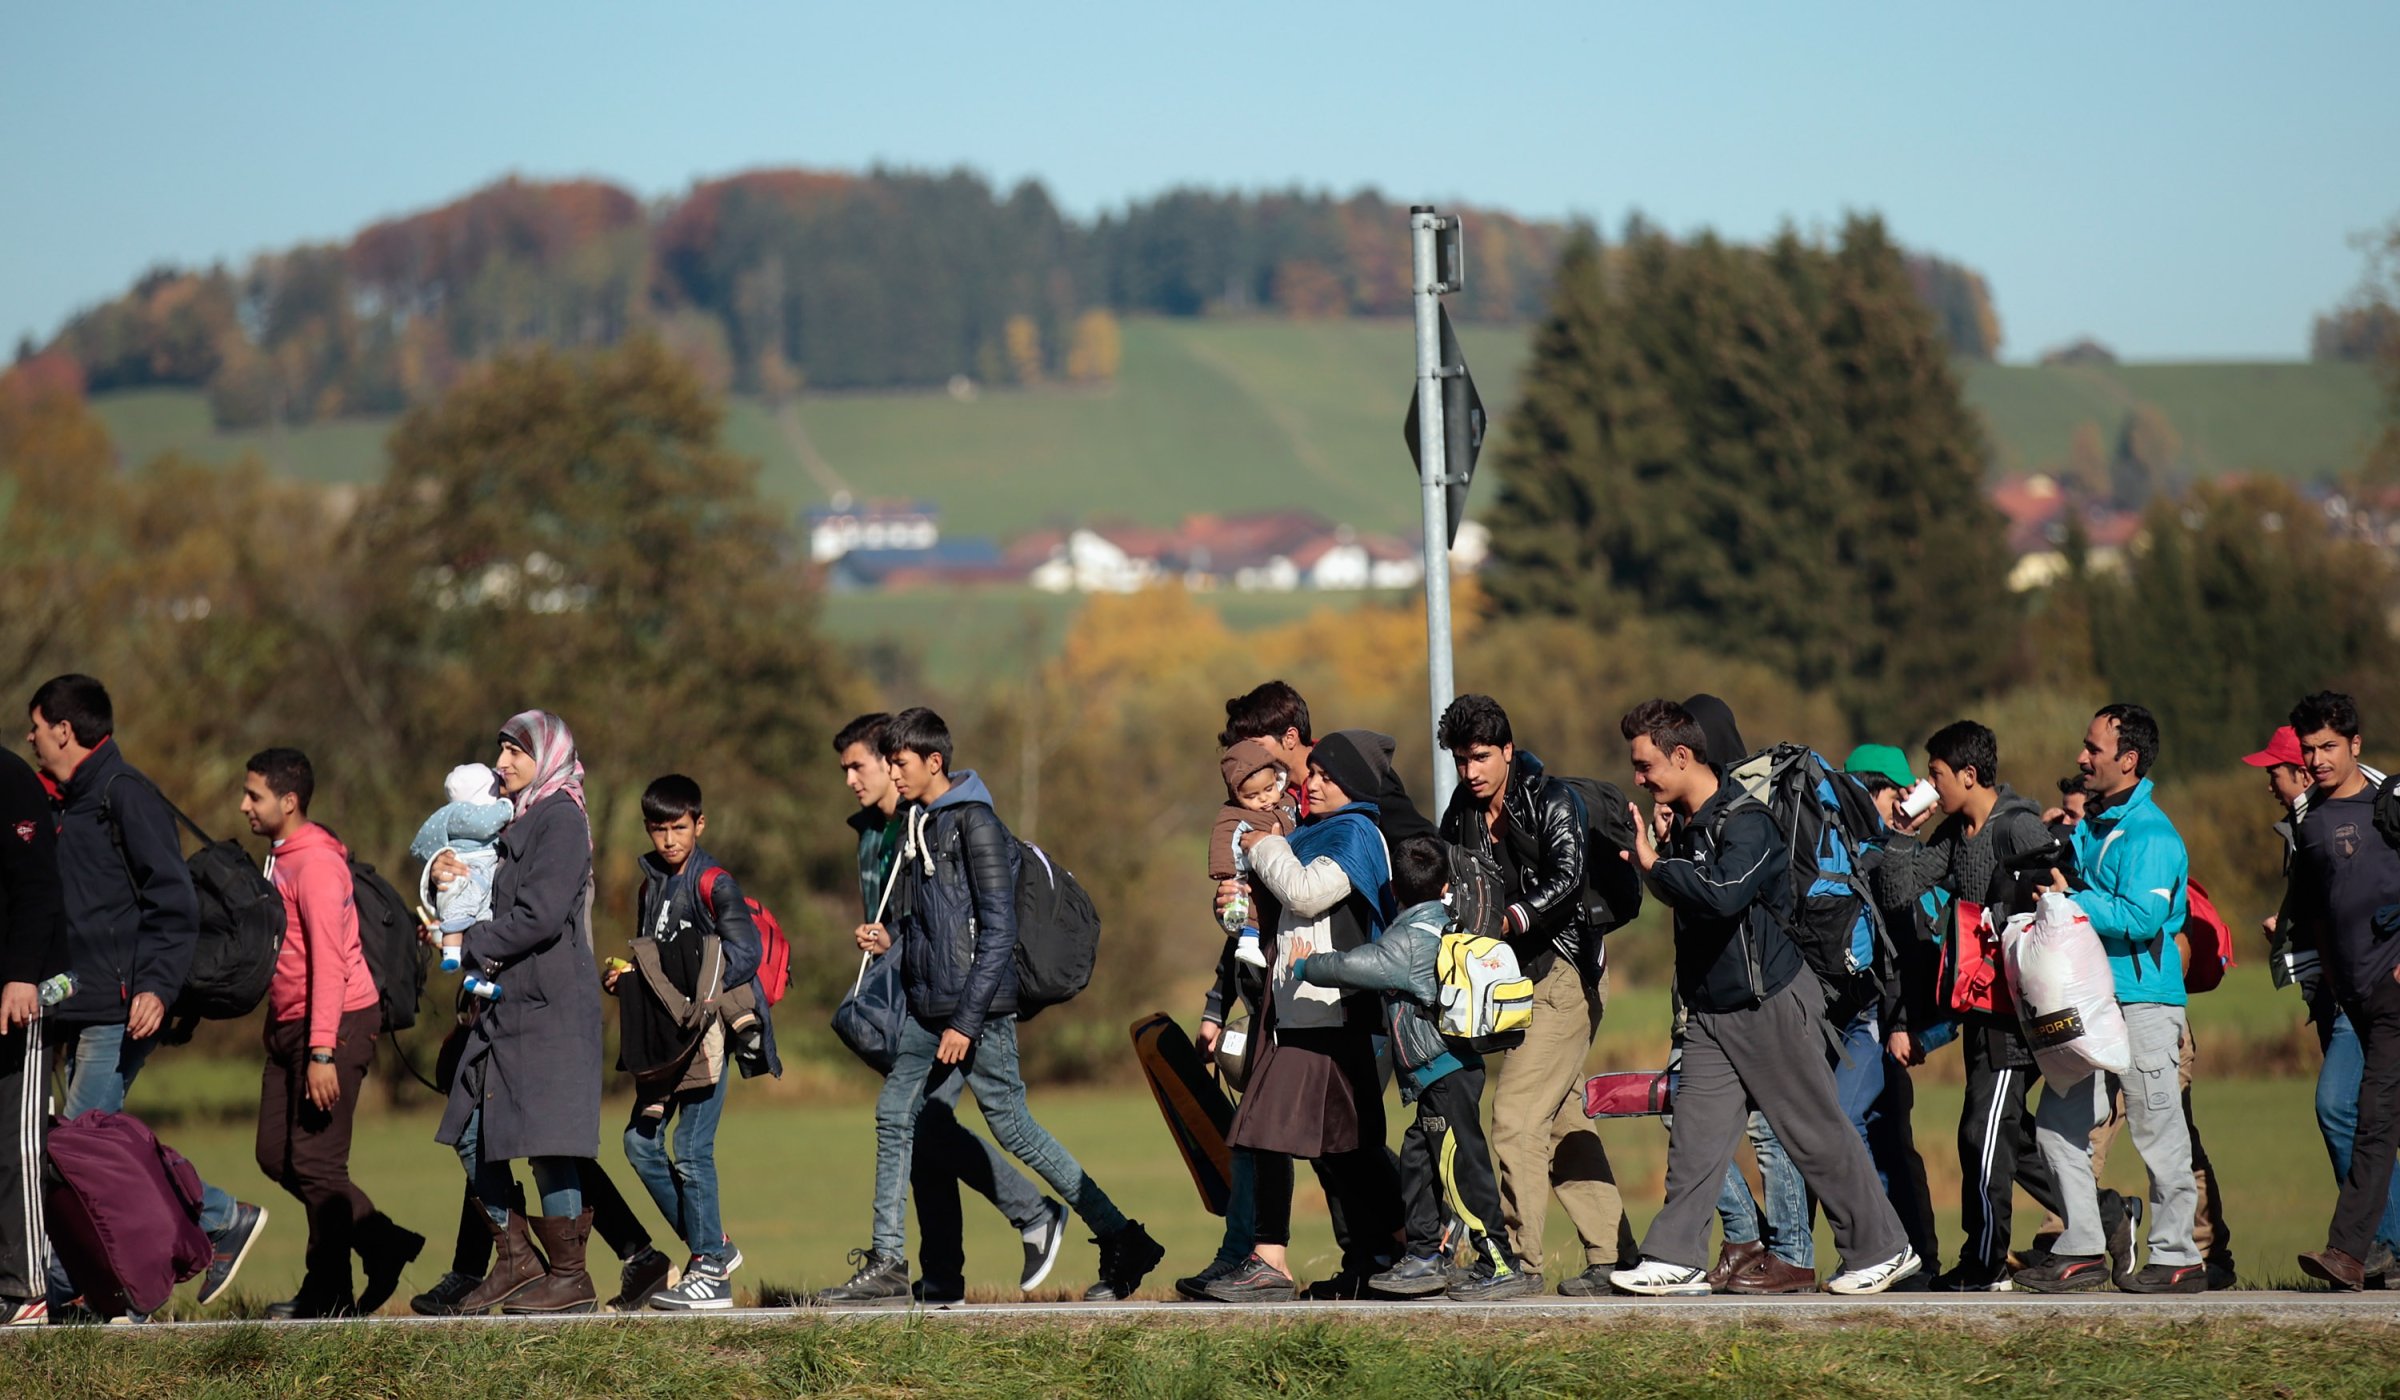 Bavaria Complains As Austrians Shuttle Migrants To Border Region